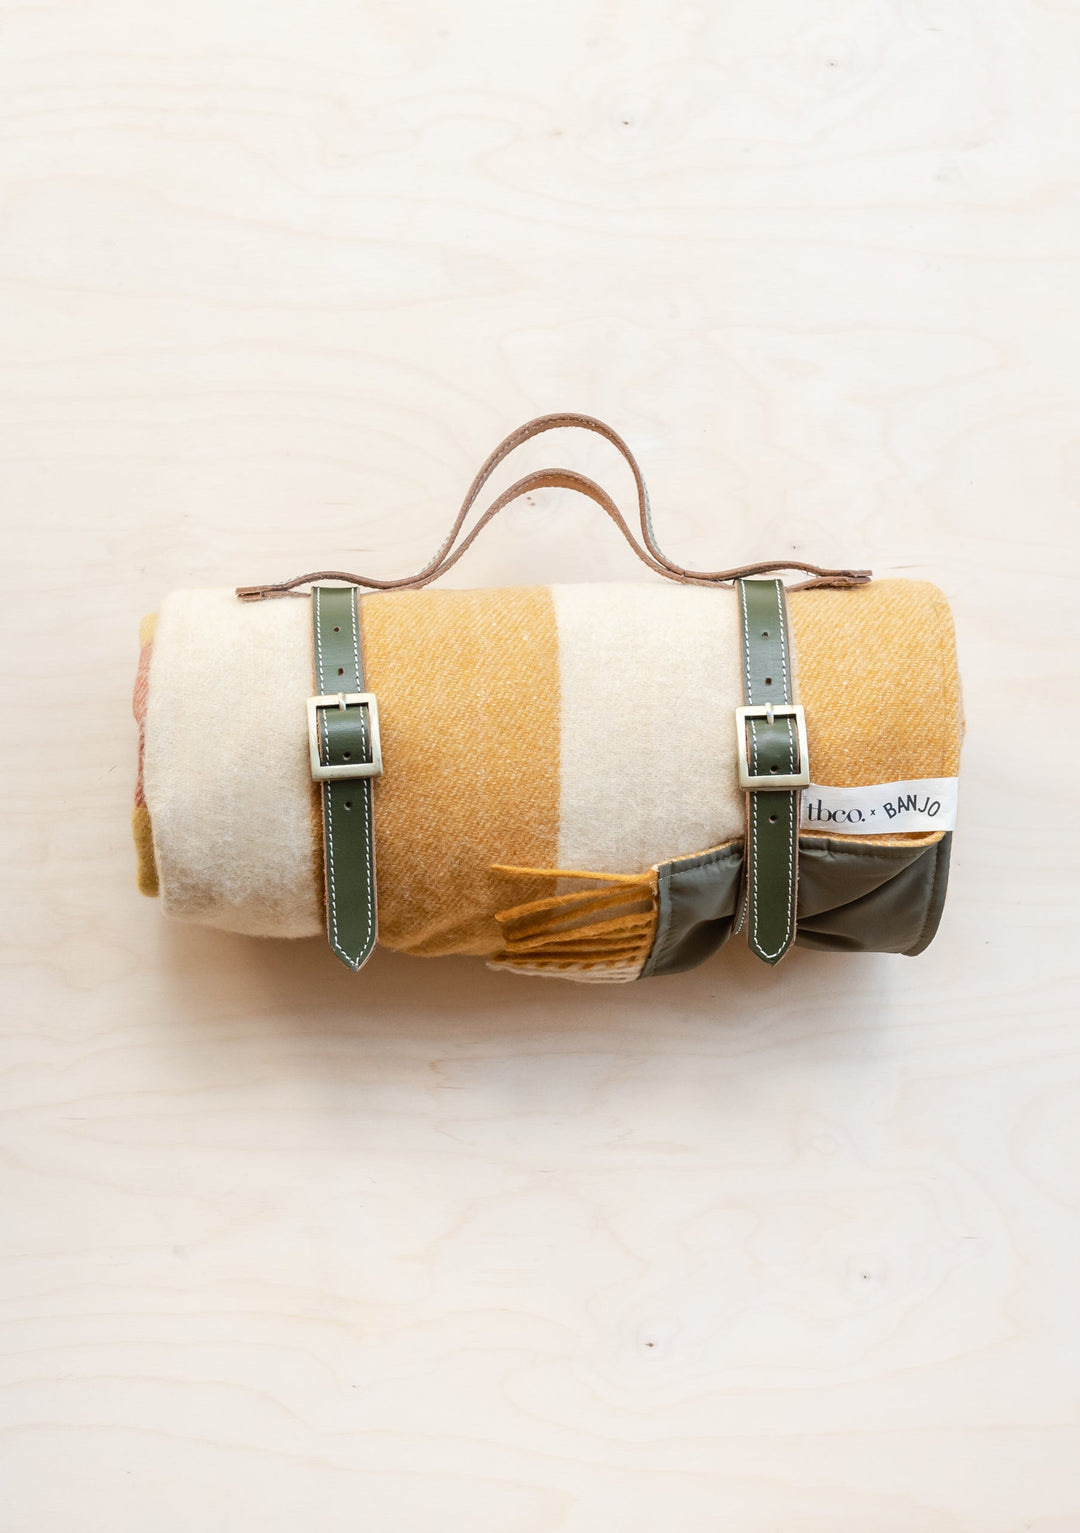 TBCo x Banjo Picknickdecke aus recycelter Wolle mit goldenem Streifenkaro